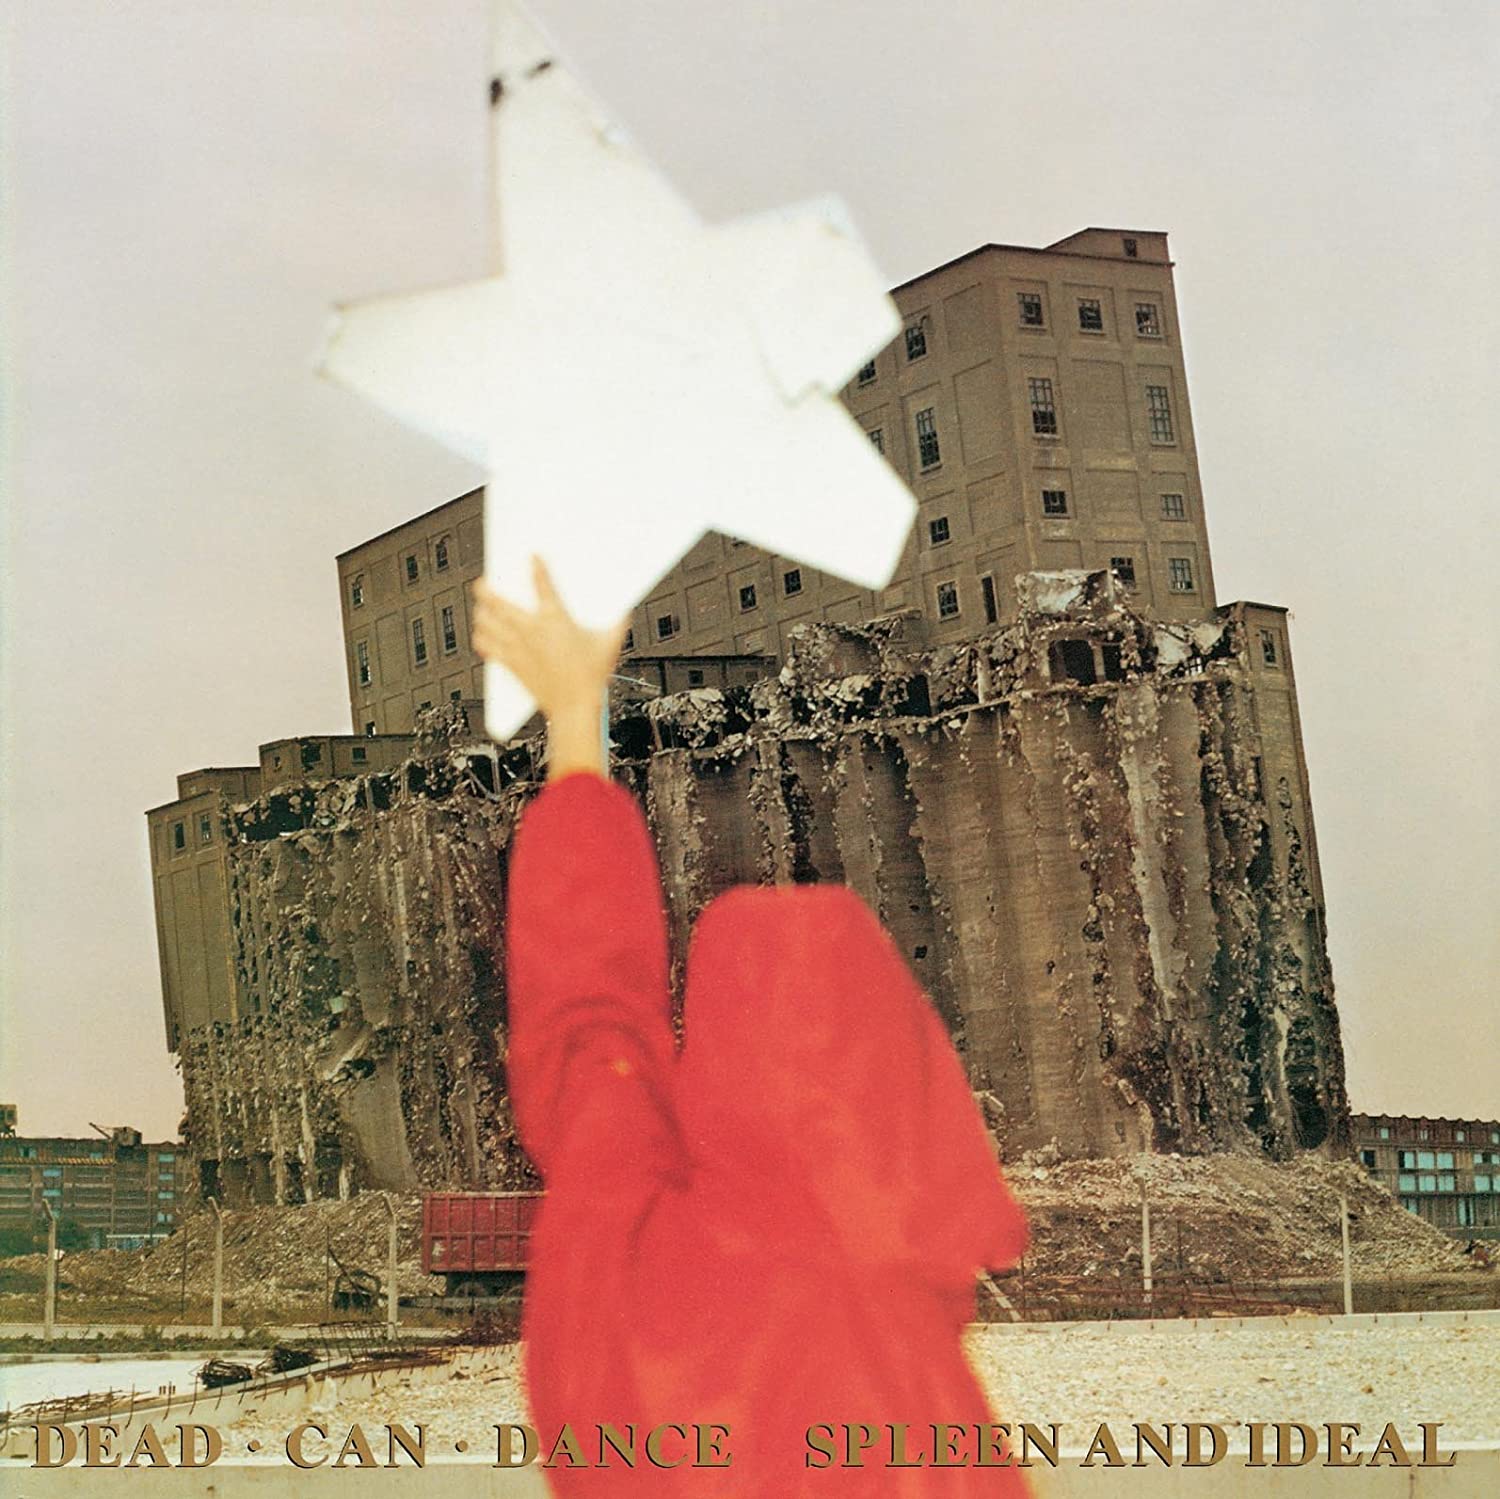 Dead Can Dance "Spleen and ideal" LP